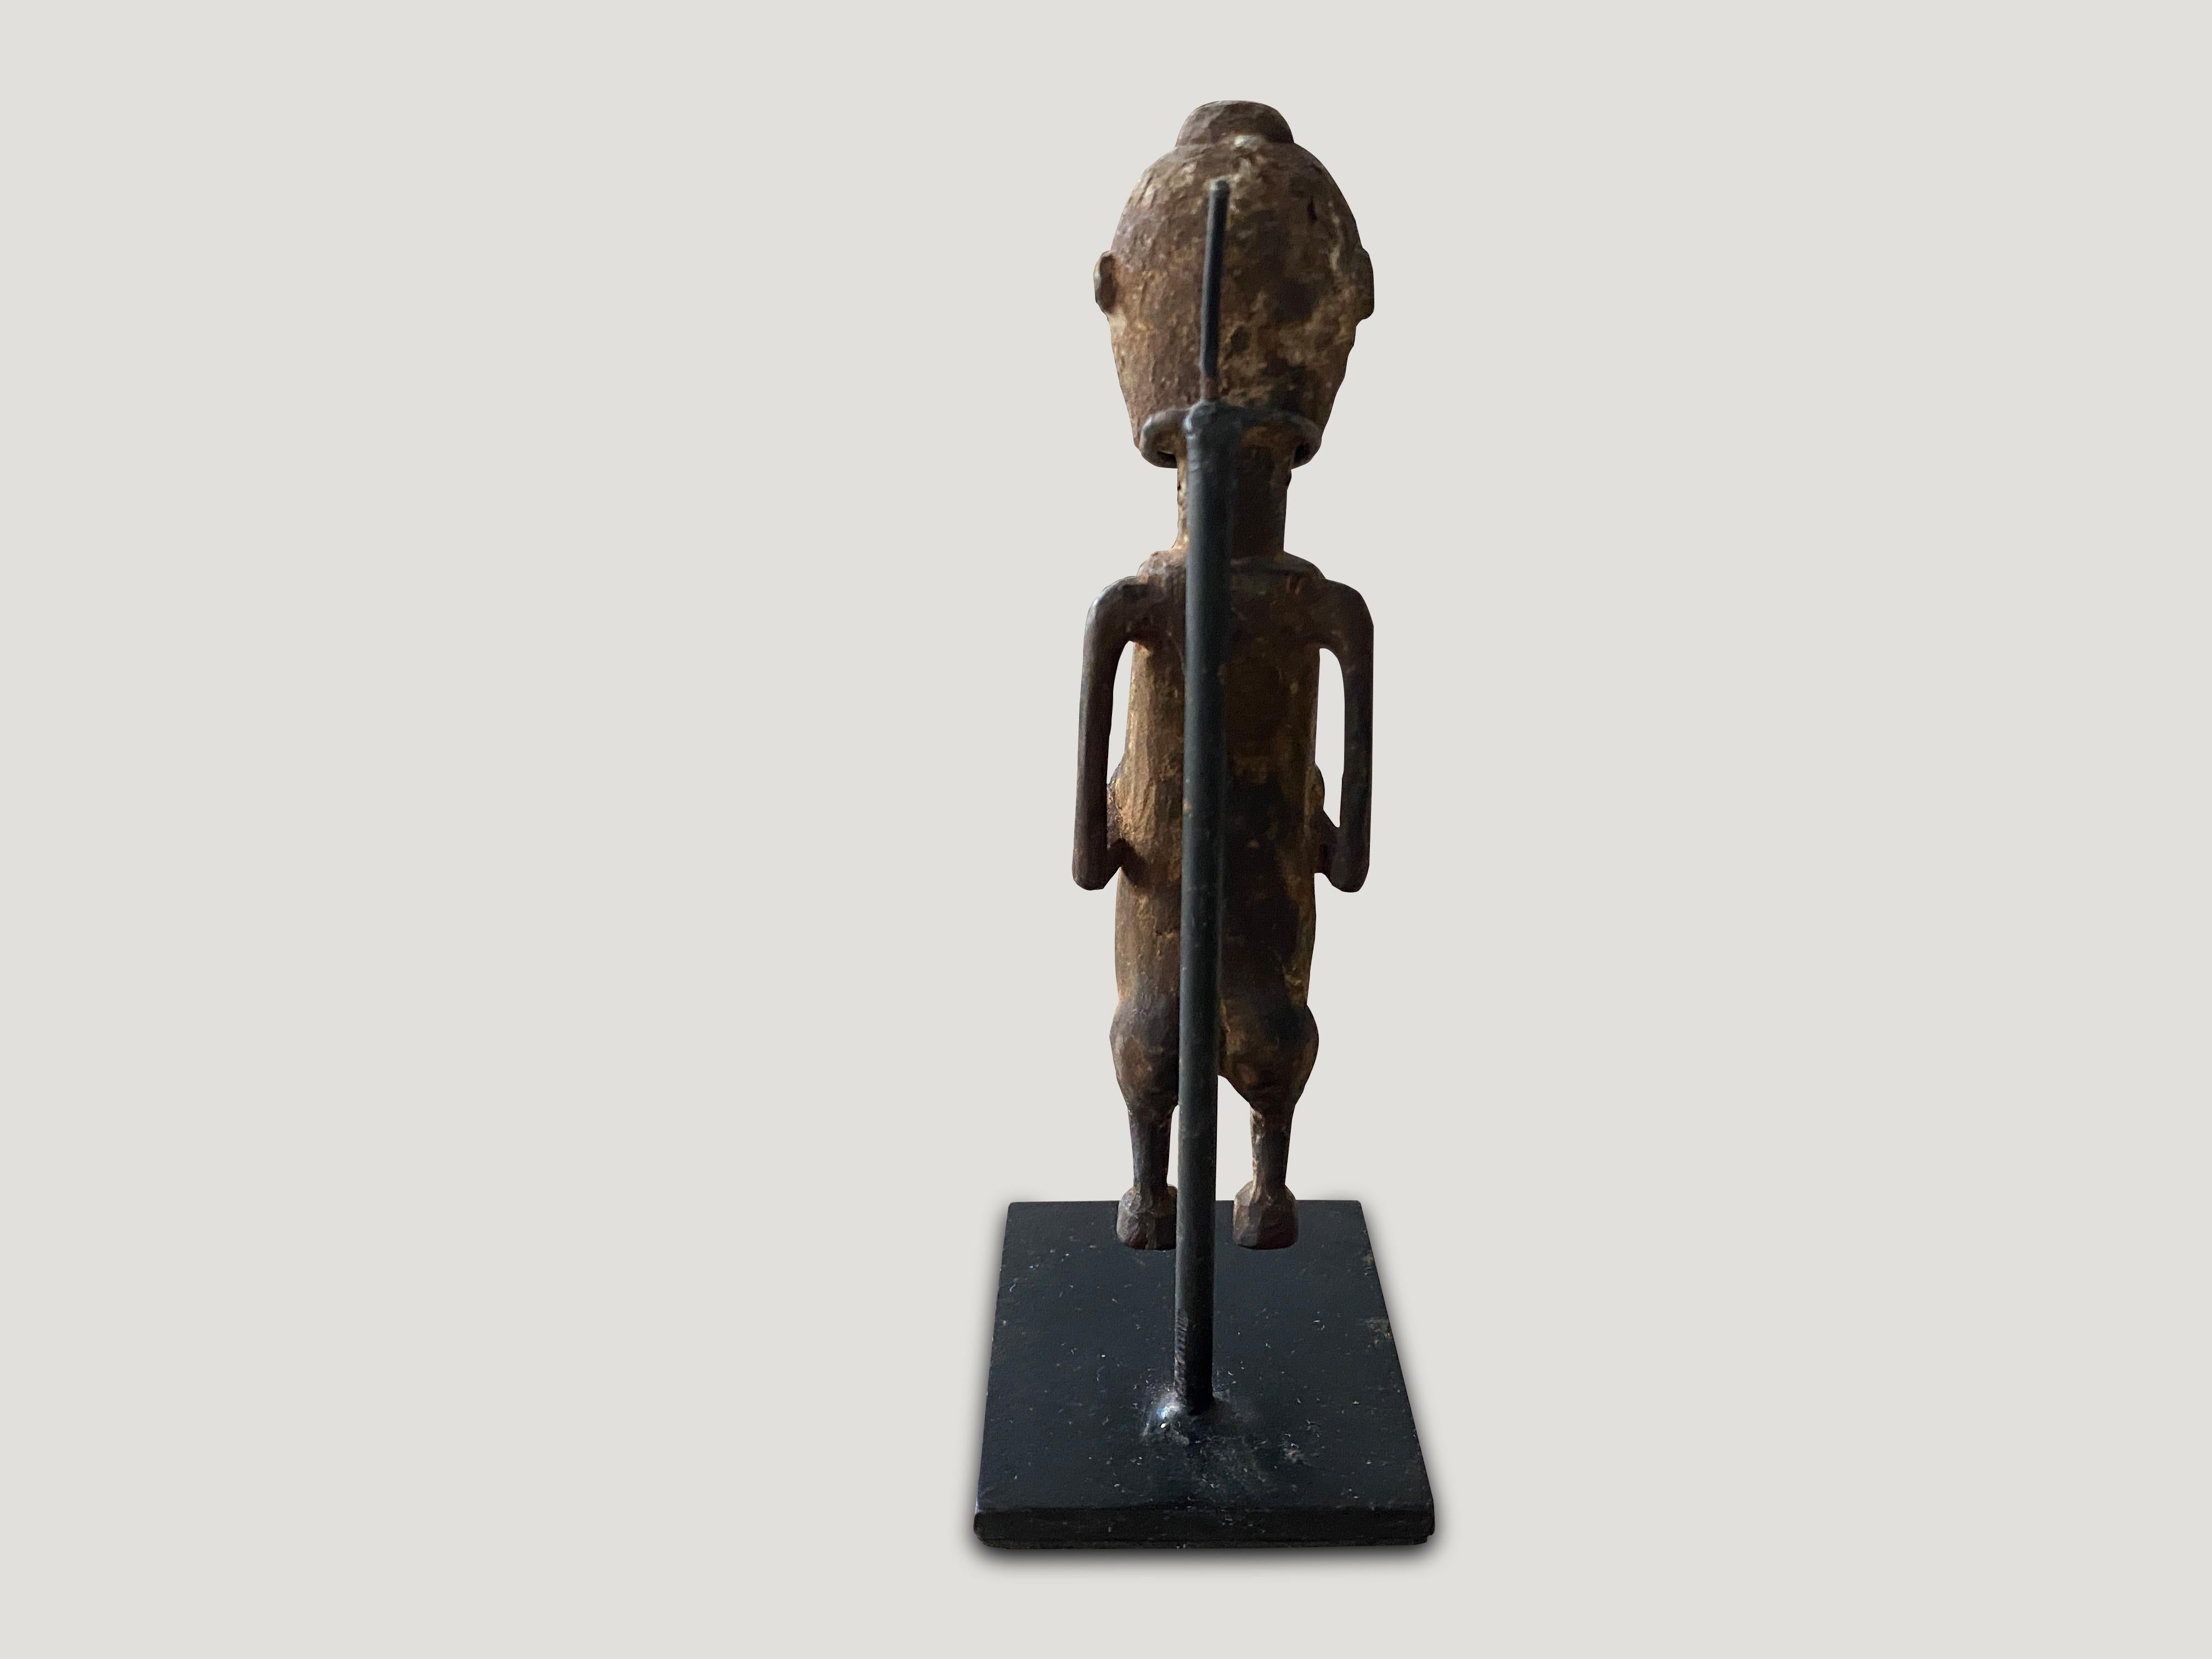 intricate wooden figurine